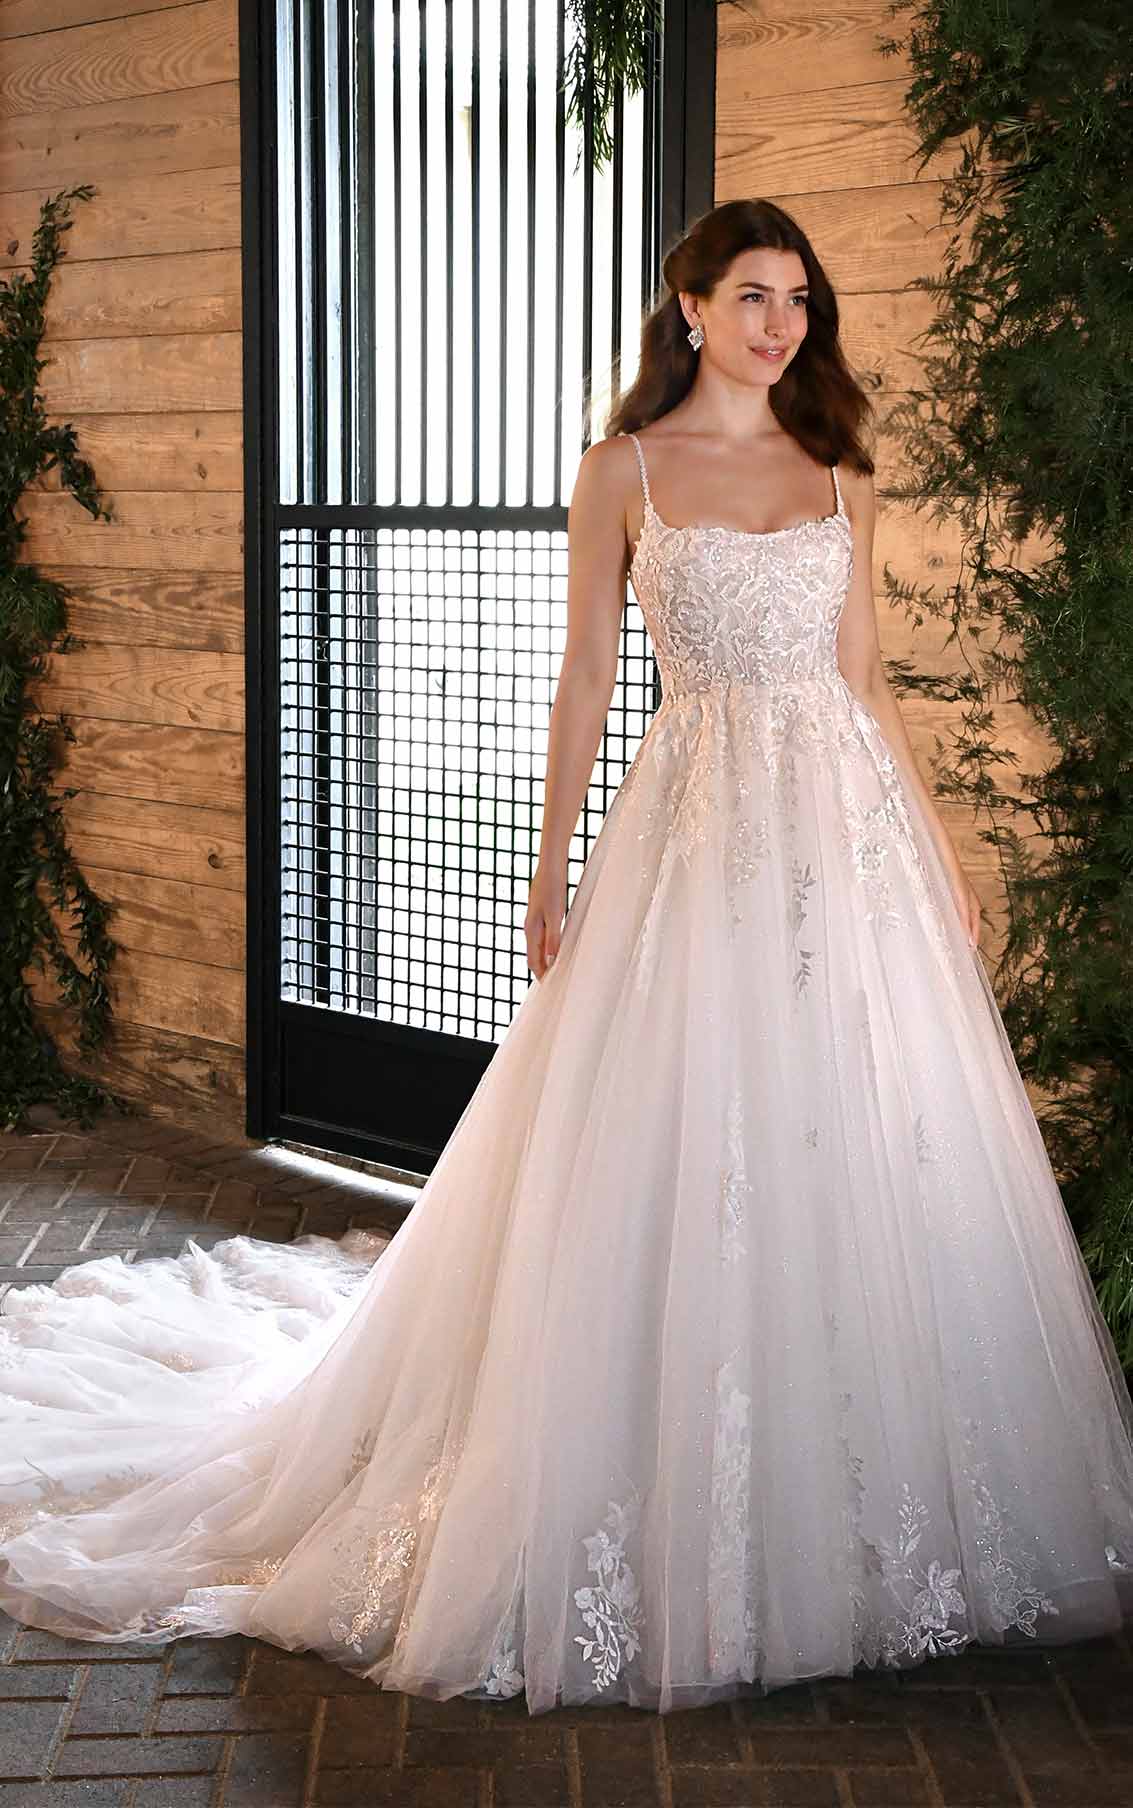 Sleeveless ballgown wedding dress